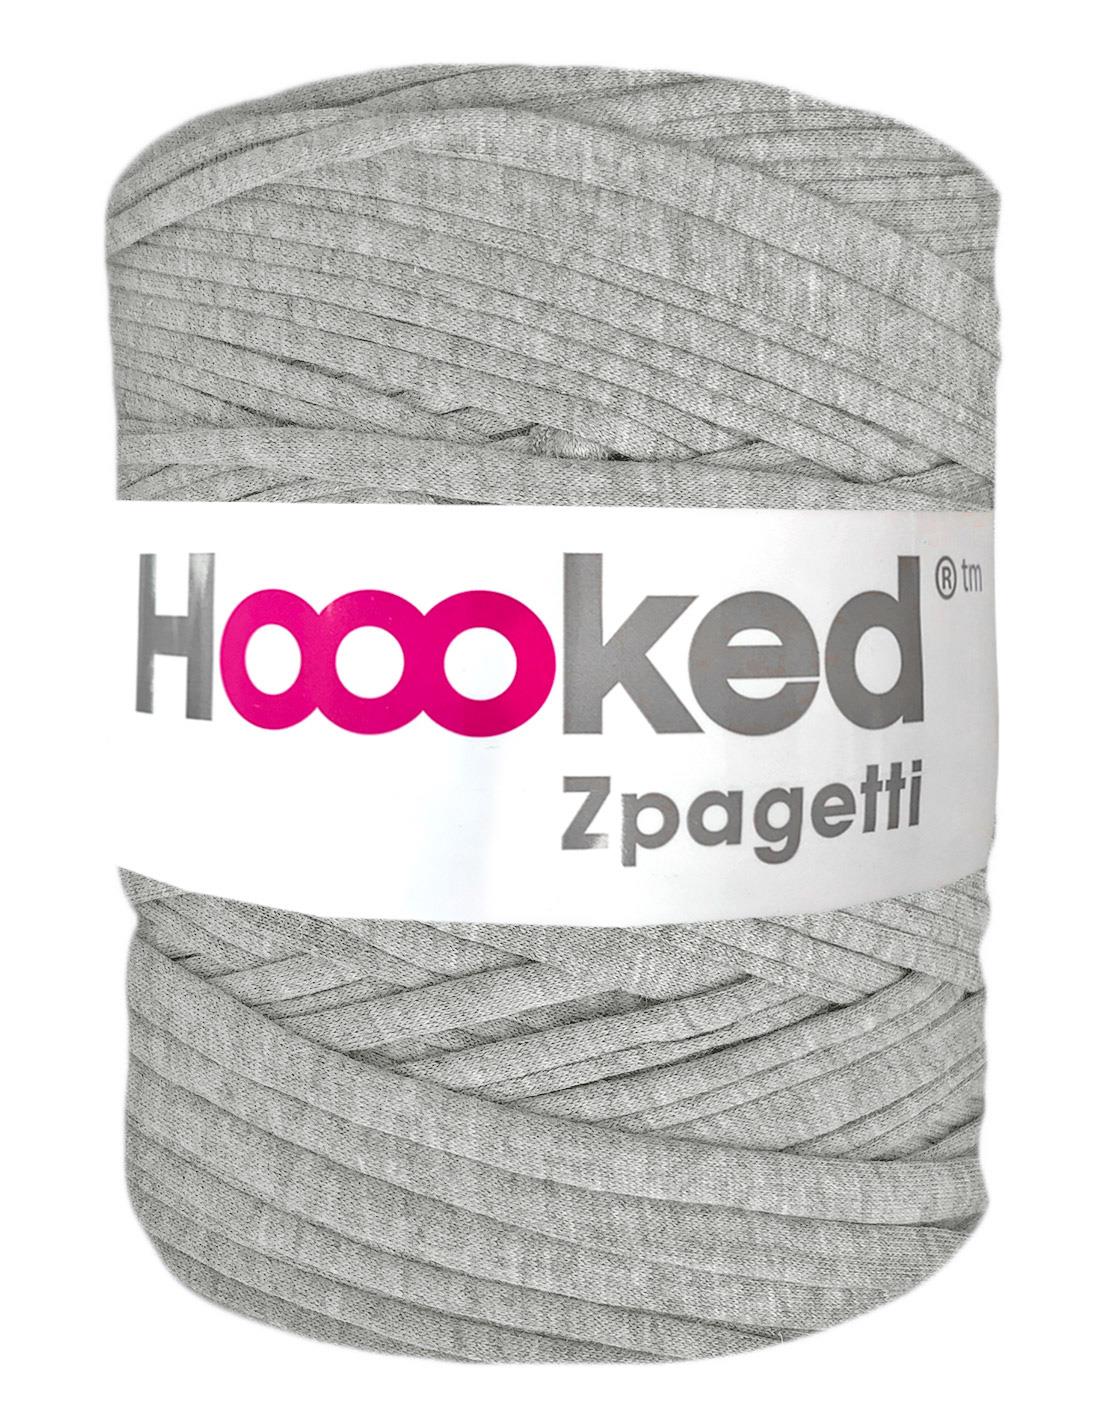 Grey t-shirt yarn by Hoooked Zpagetti (100-120m)